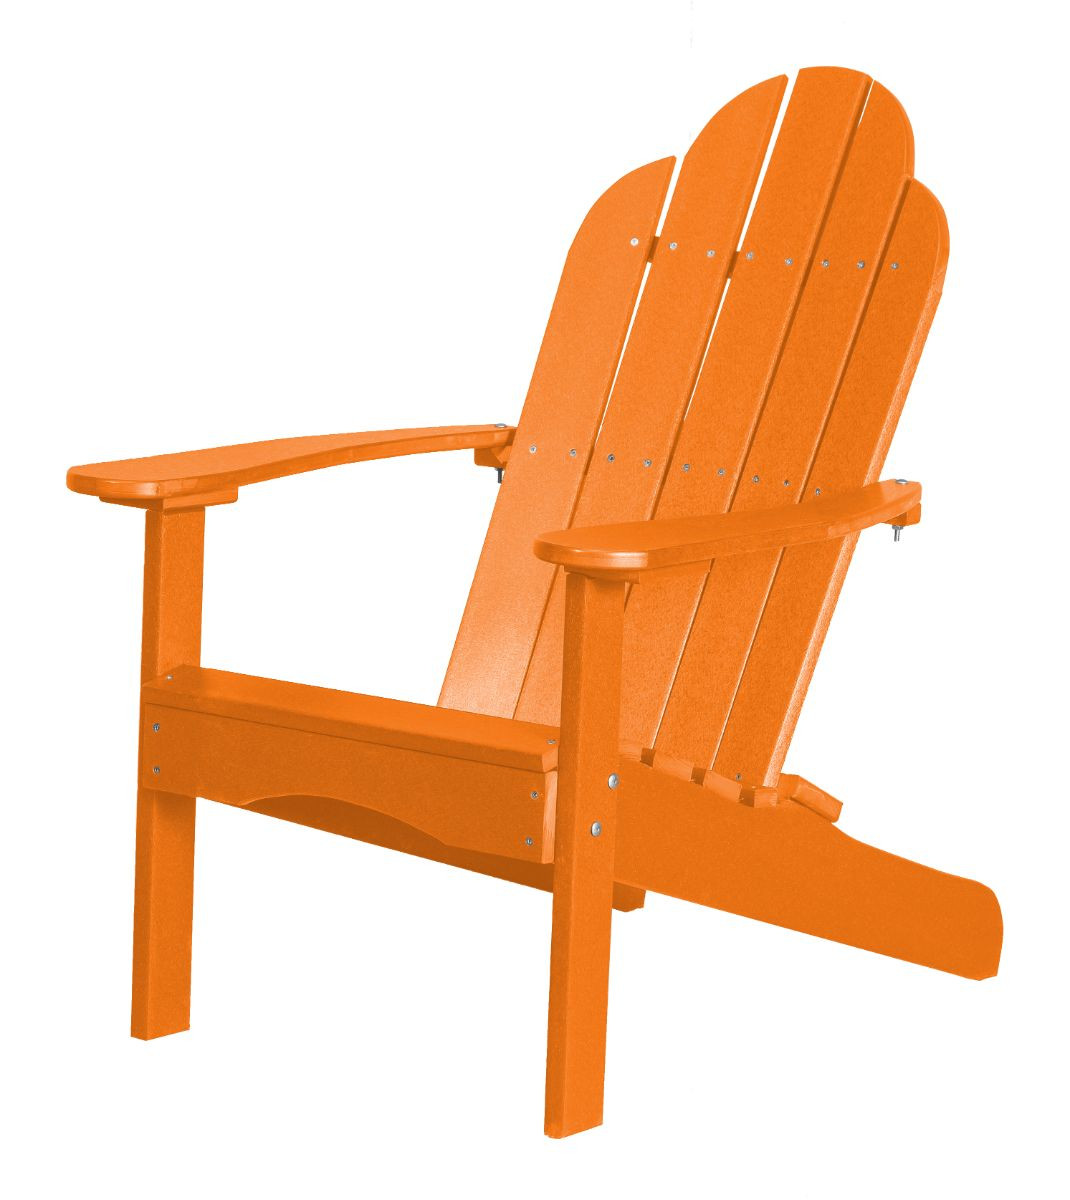 Bright Orange Odessa Adirondack Chair